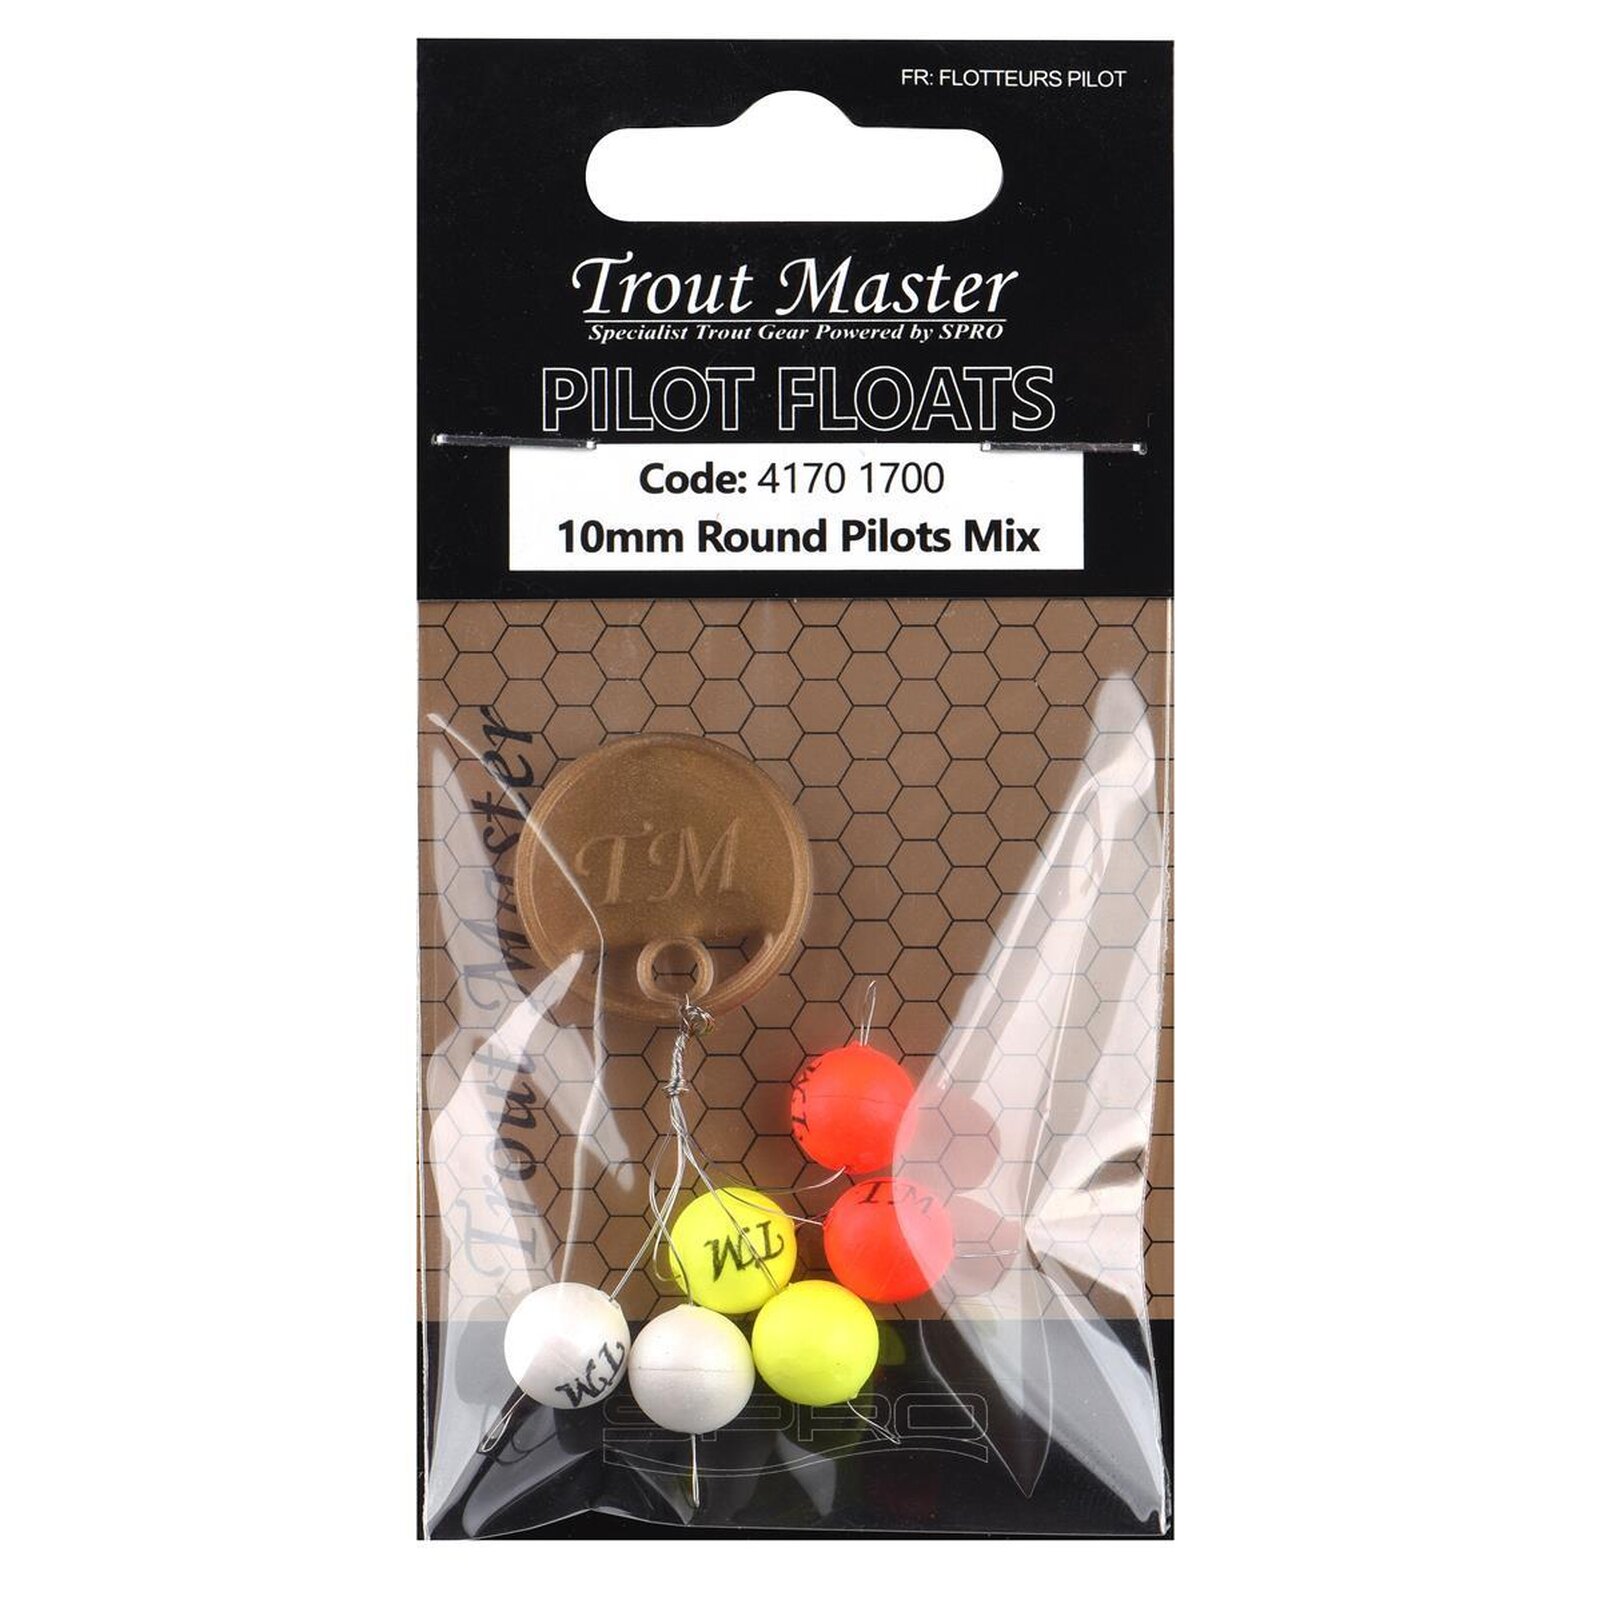 Trout Master Round Pilots Mix